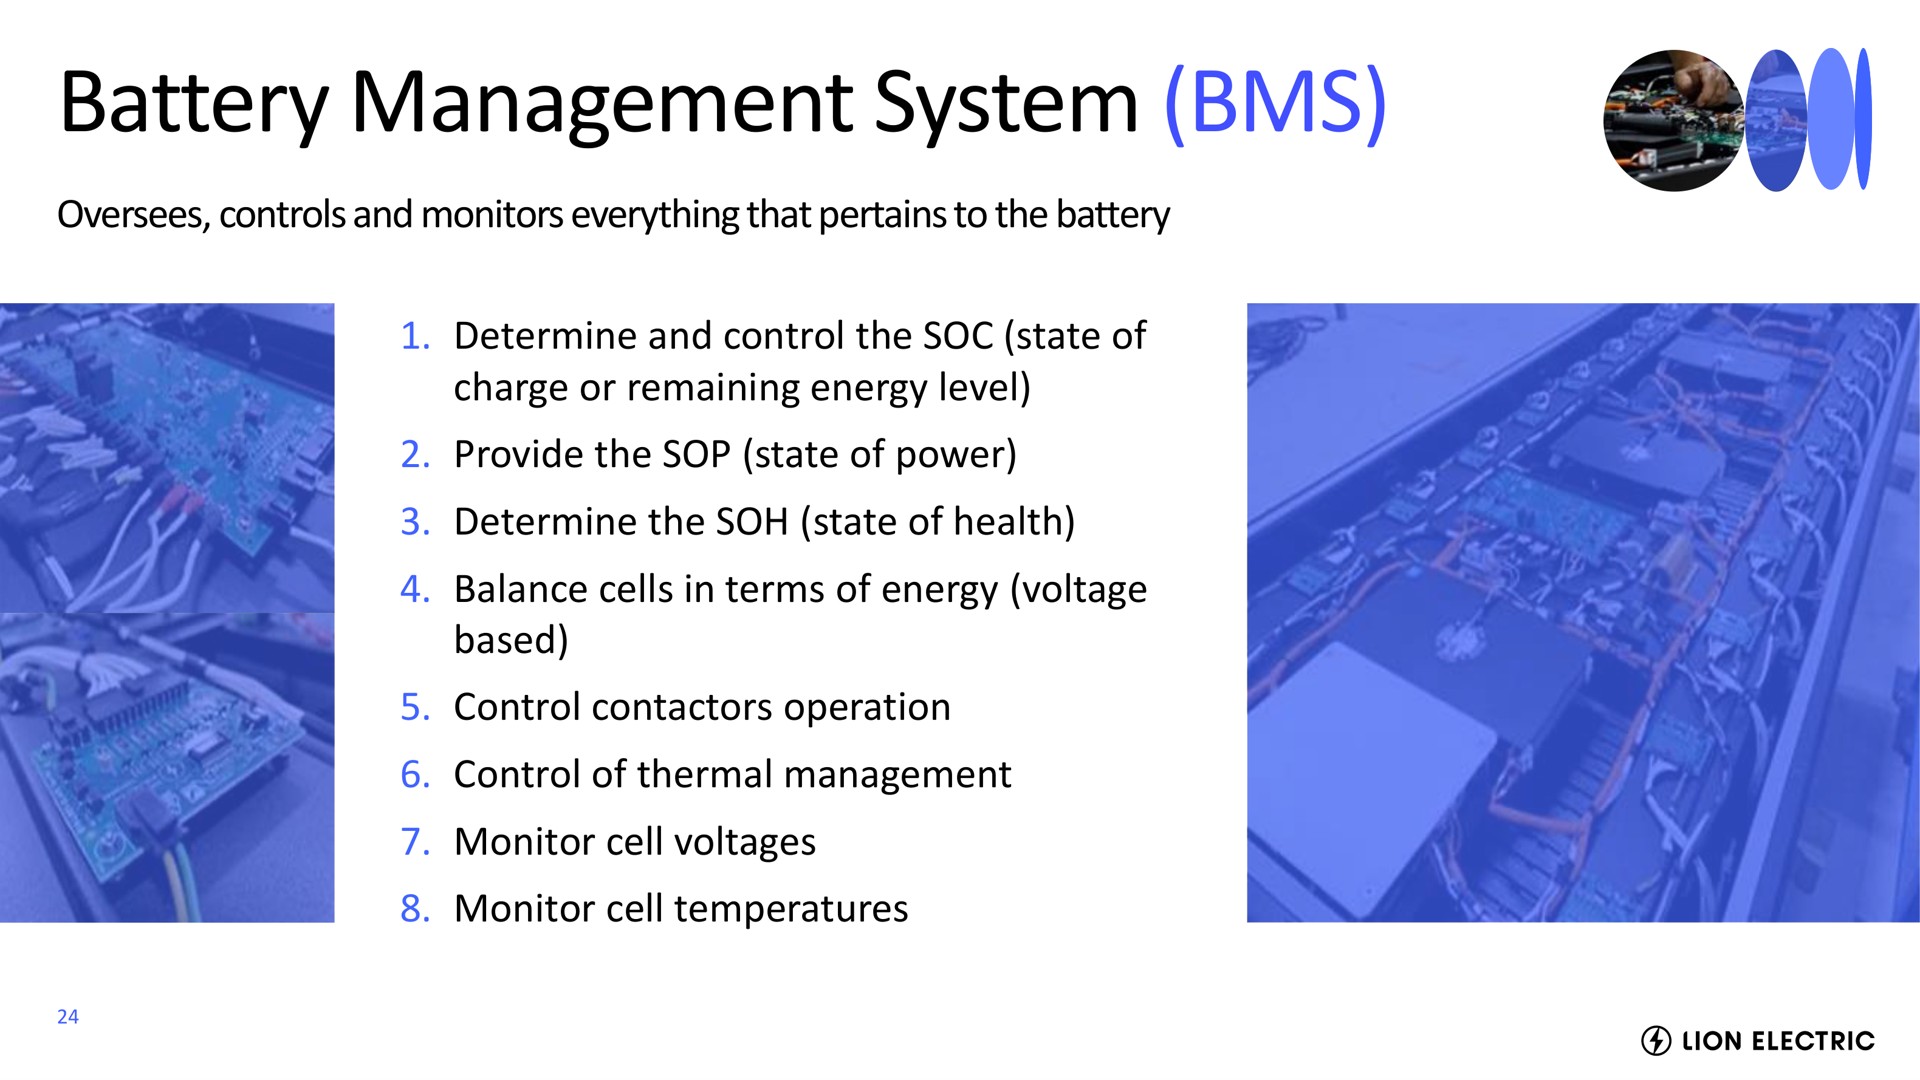 battery management system | Lion Electric